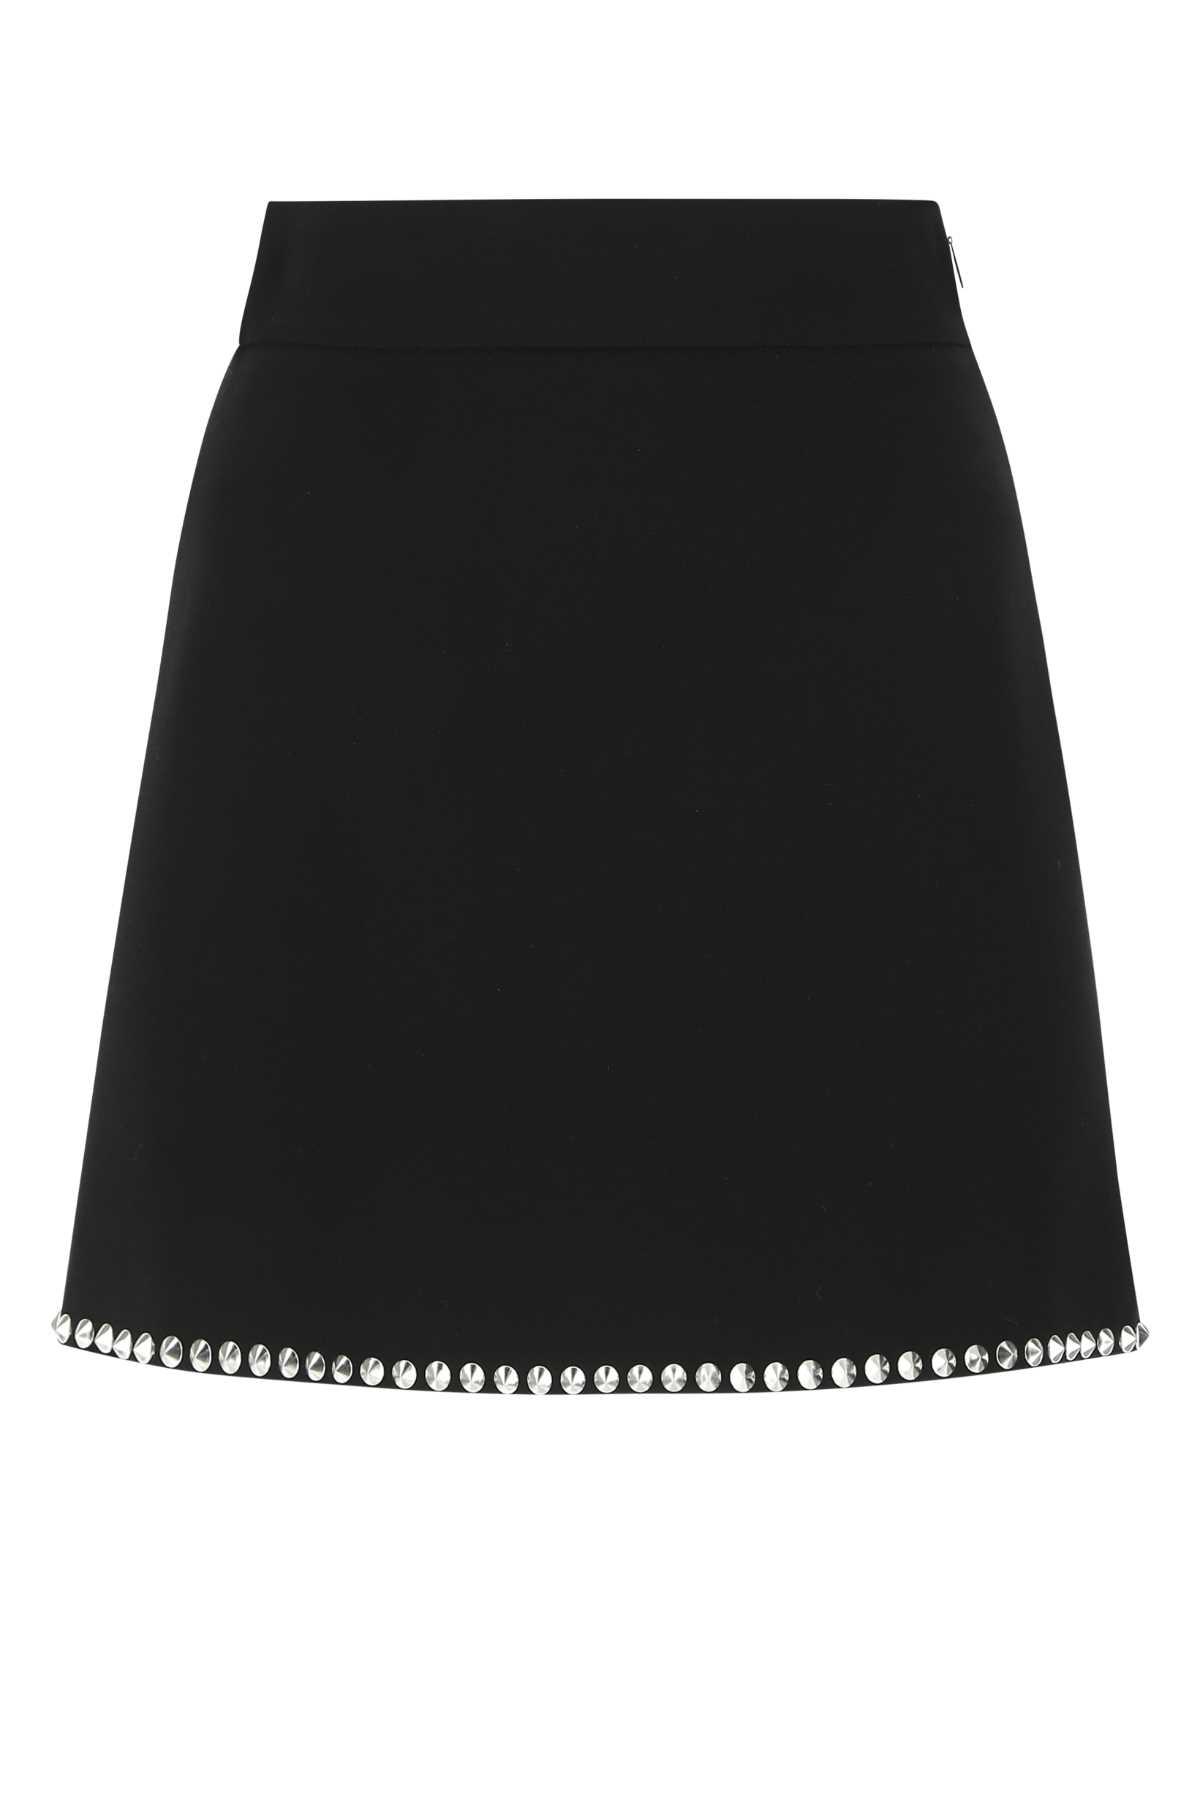 Miu Miu Black Viscose Mini Skirt